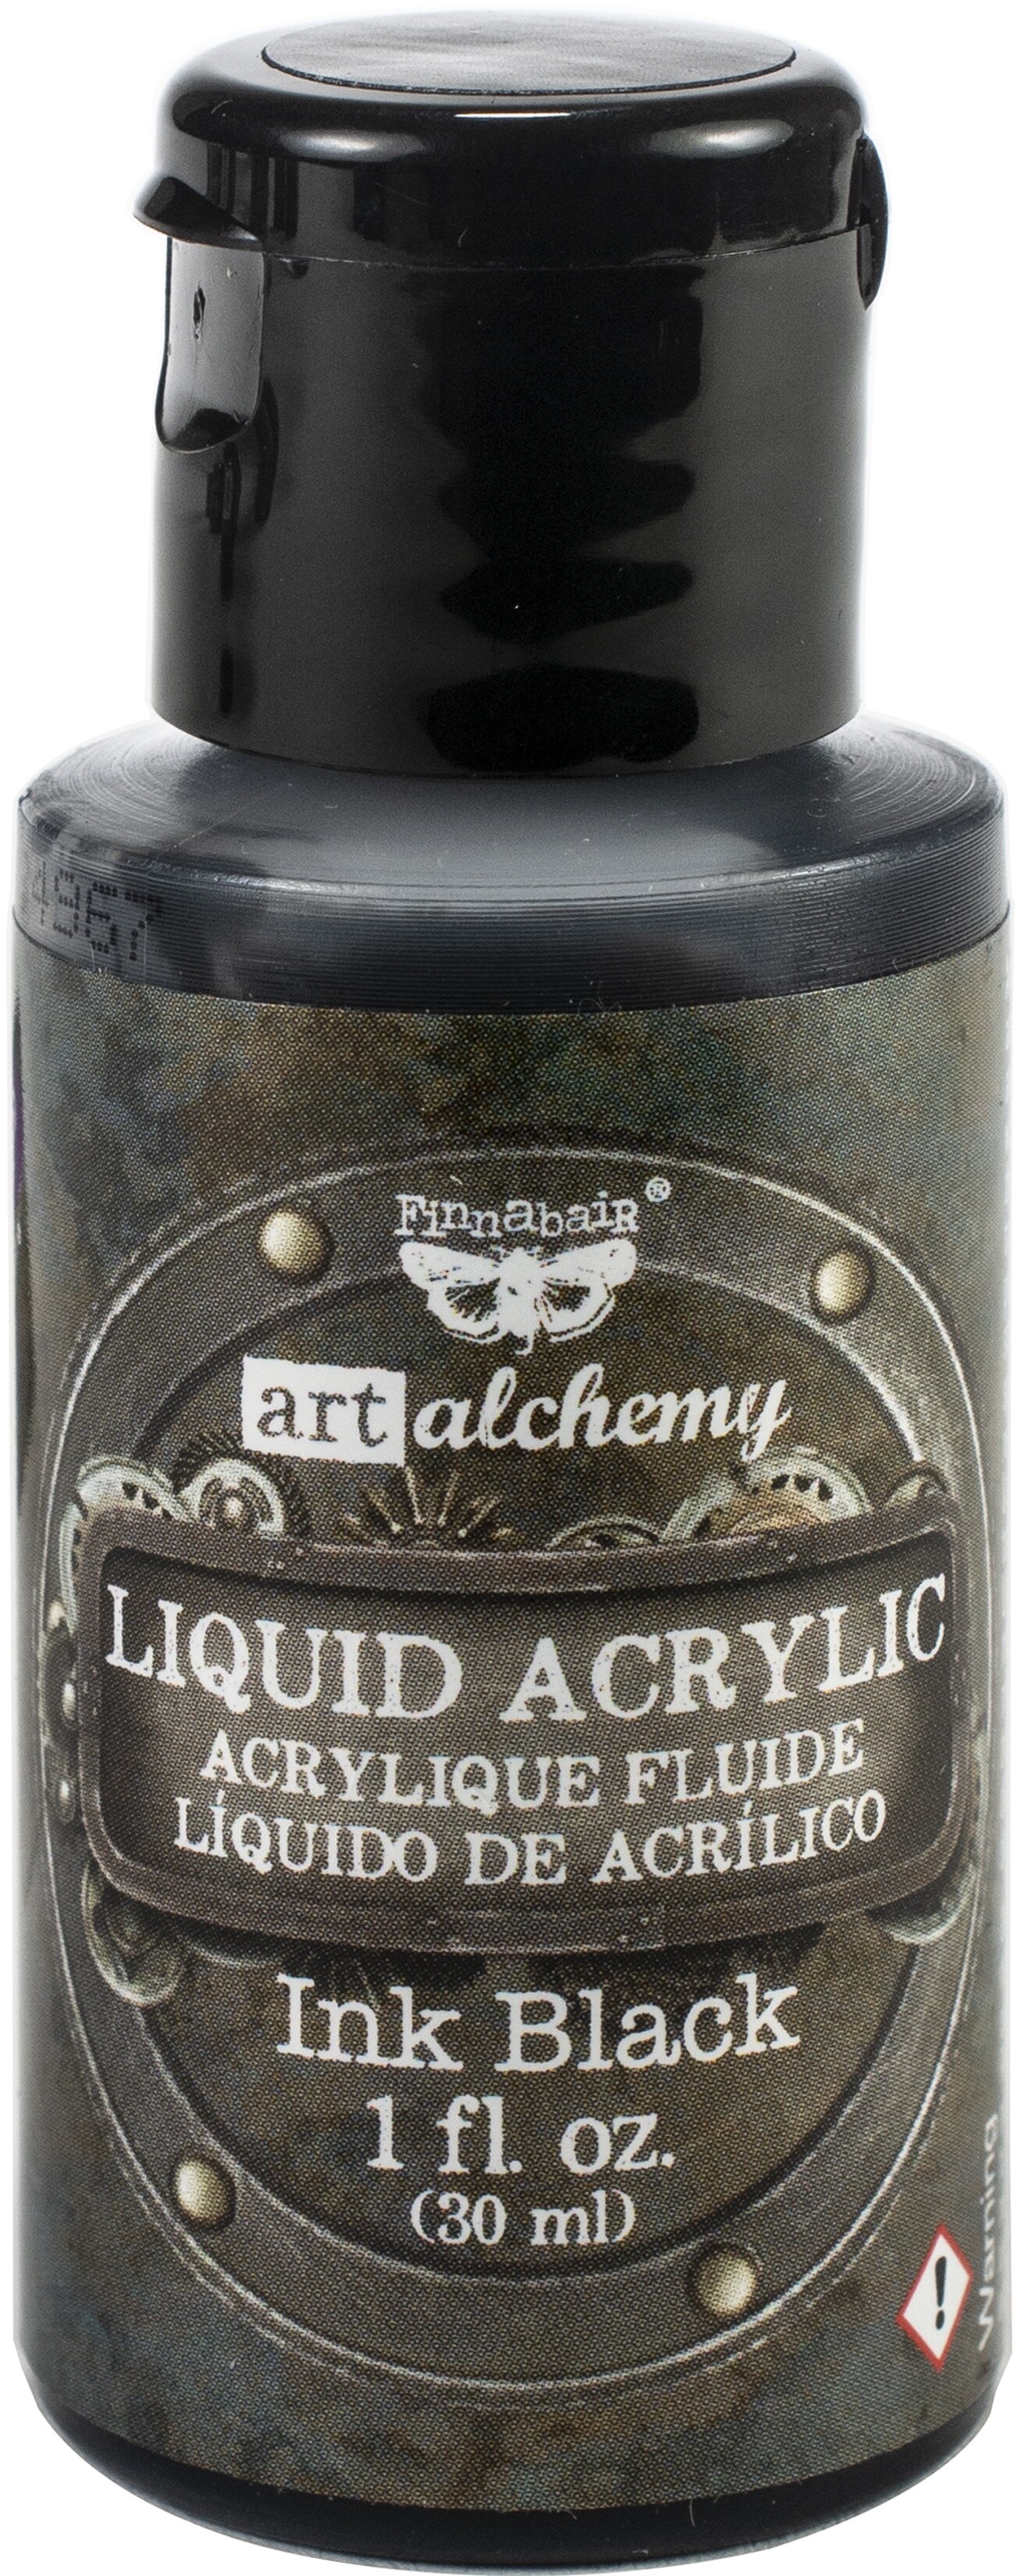 Art Alchemy-liquid Acrylic Paint Ink Black 1fl.oz 30ml FREE